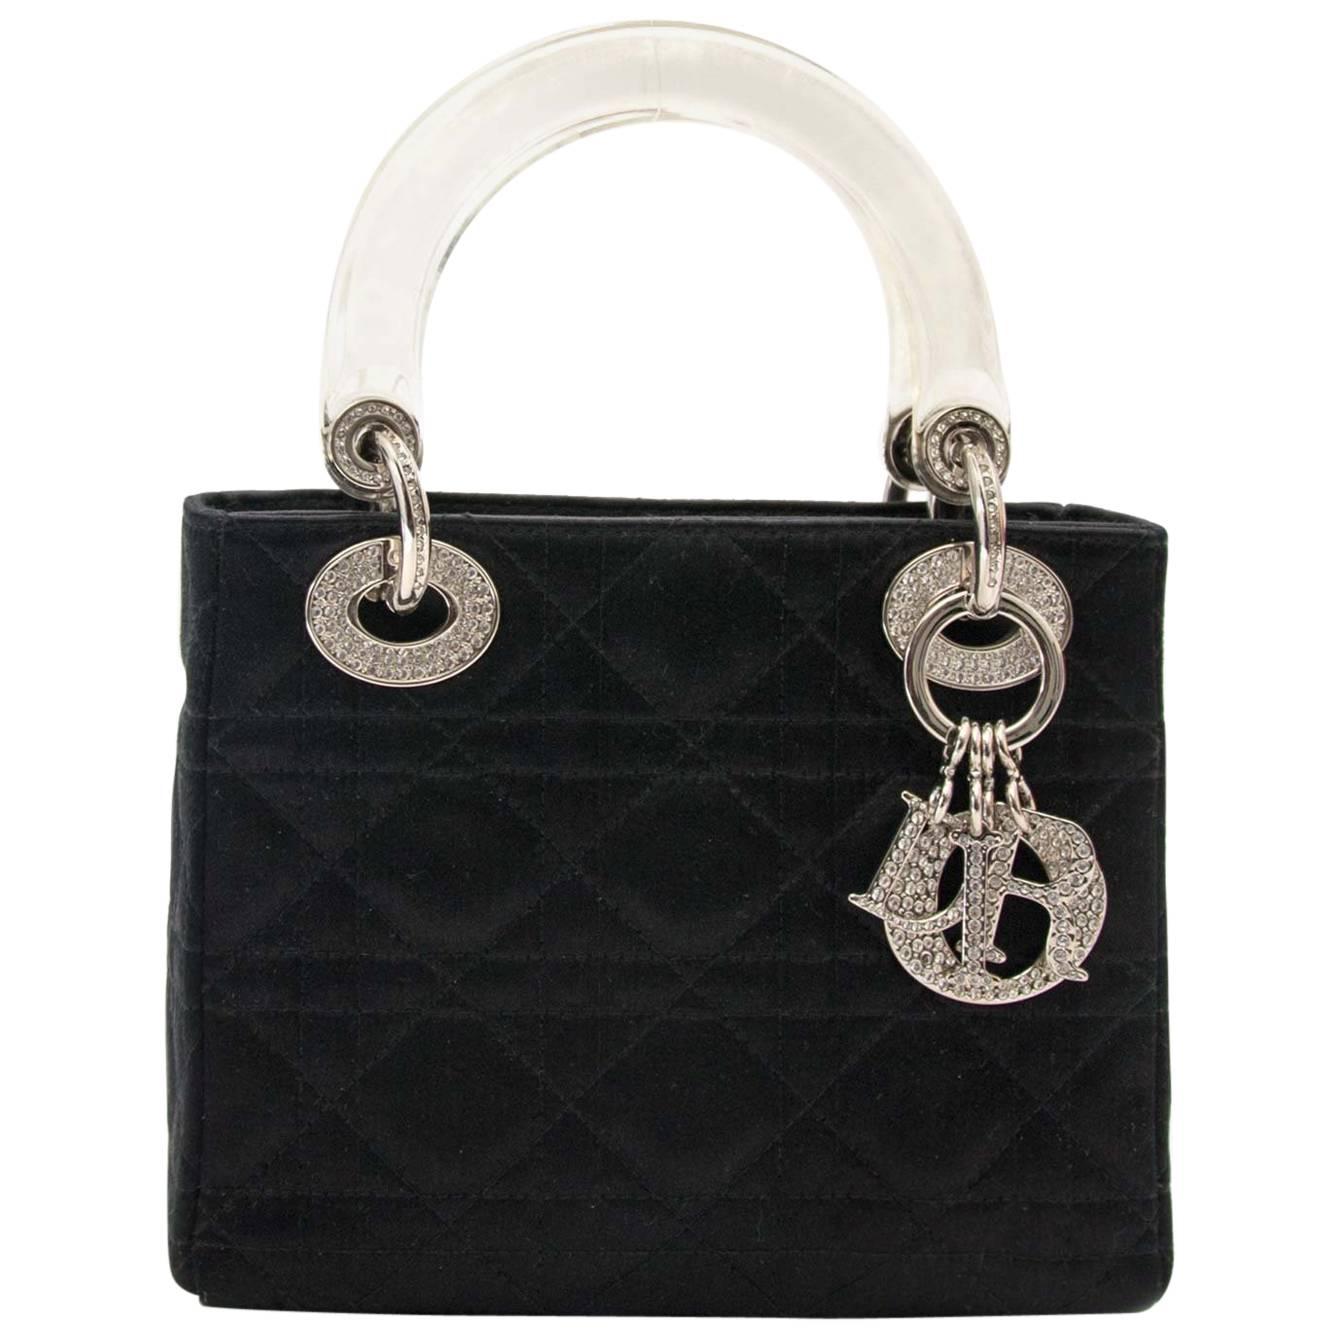 Dior Lady Dior Mini Black Satin bag With Crystals